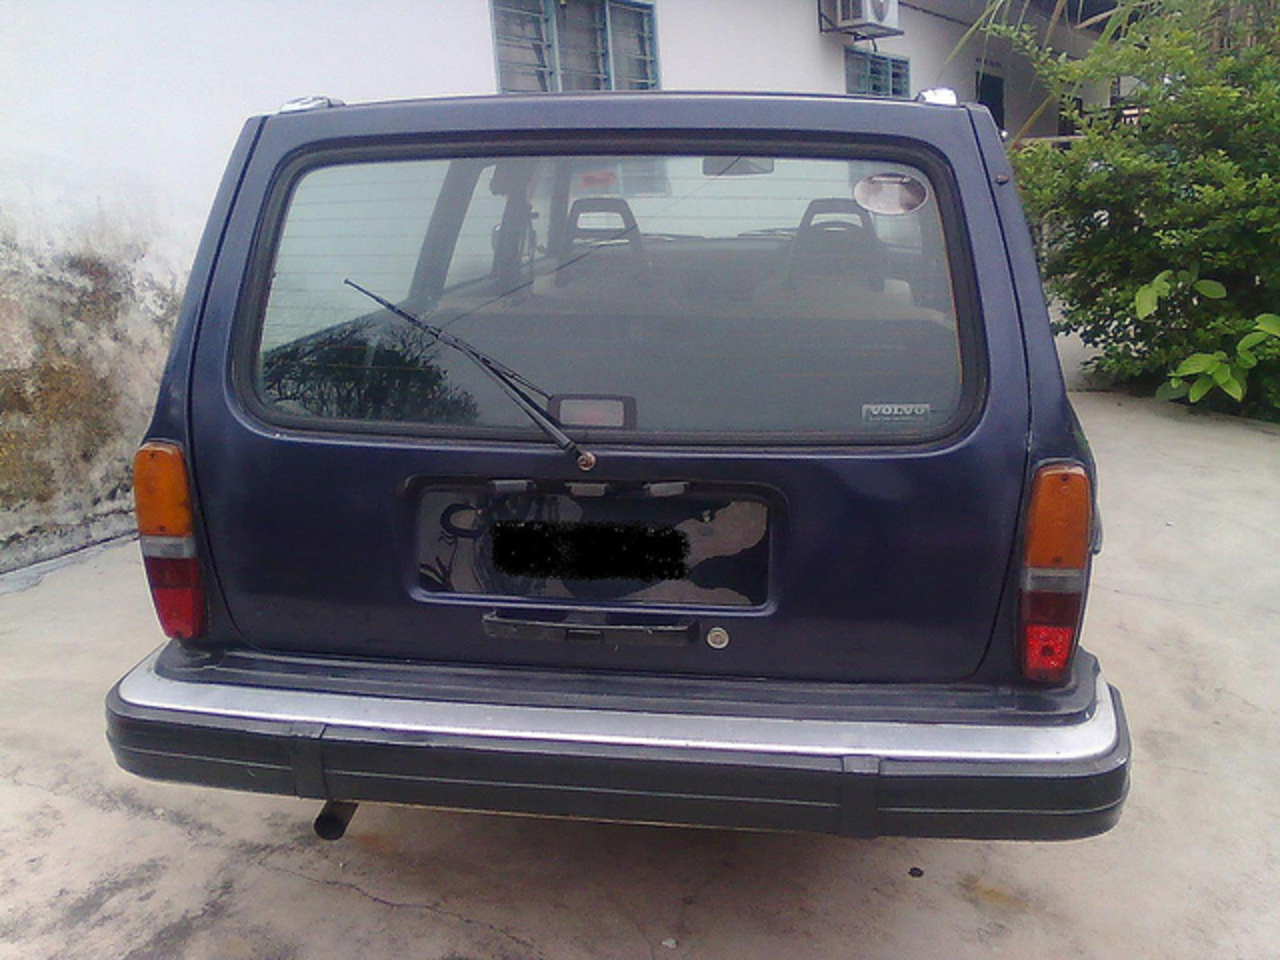 Original Condition VOLVO 245 Wagon.Rear | Flickr - Photo Sharing!